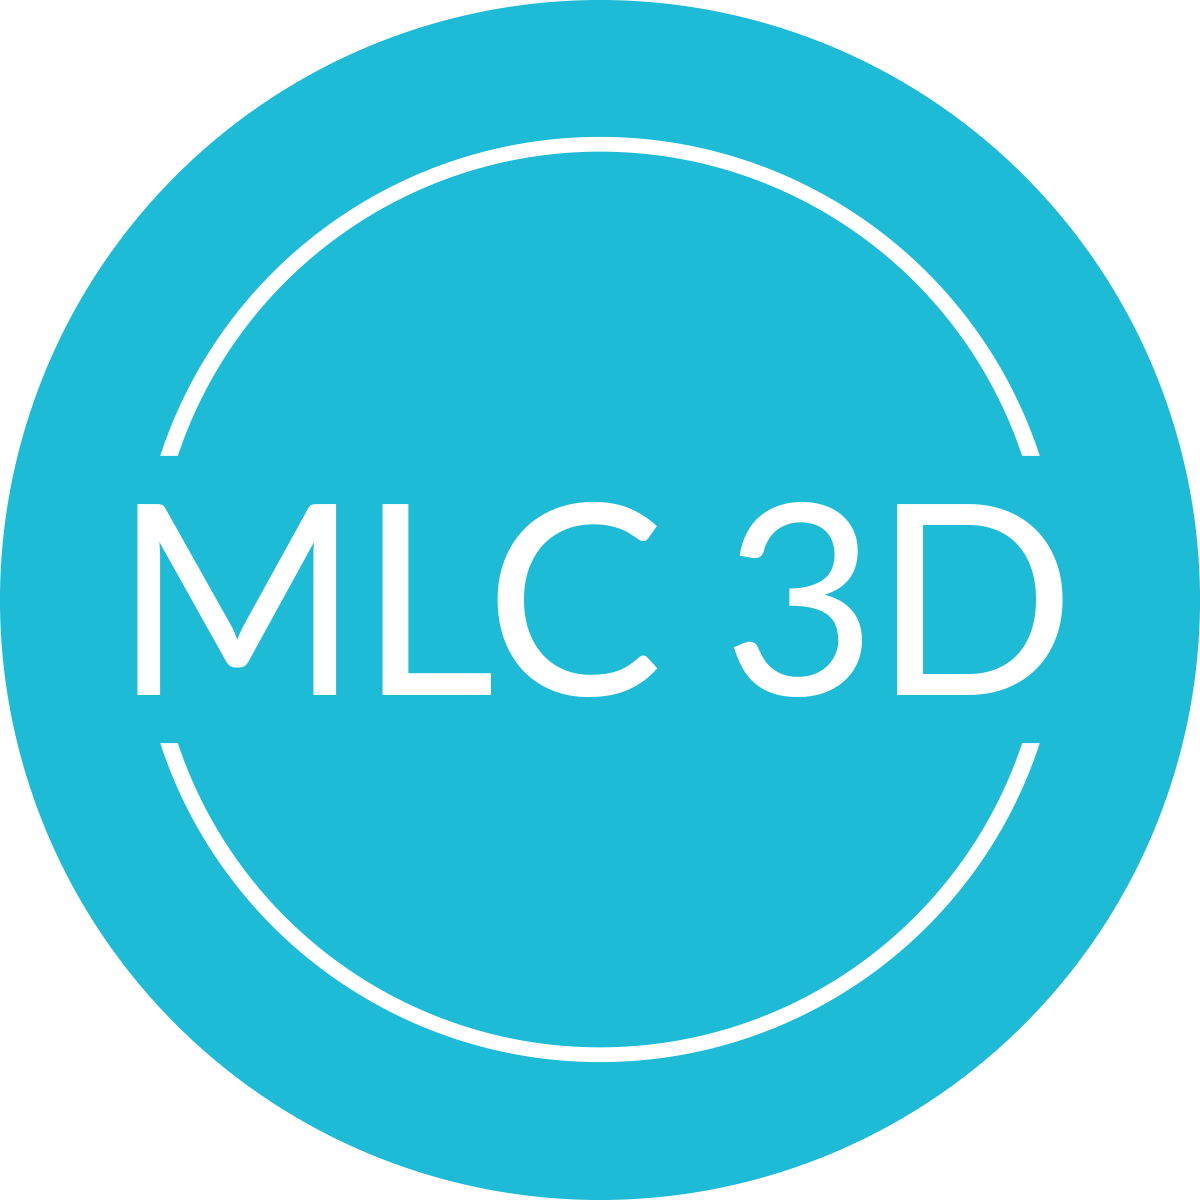 MLC 3D logo